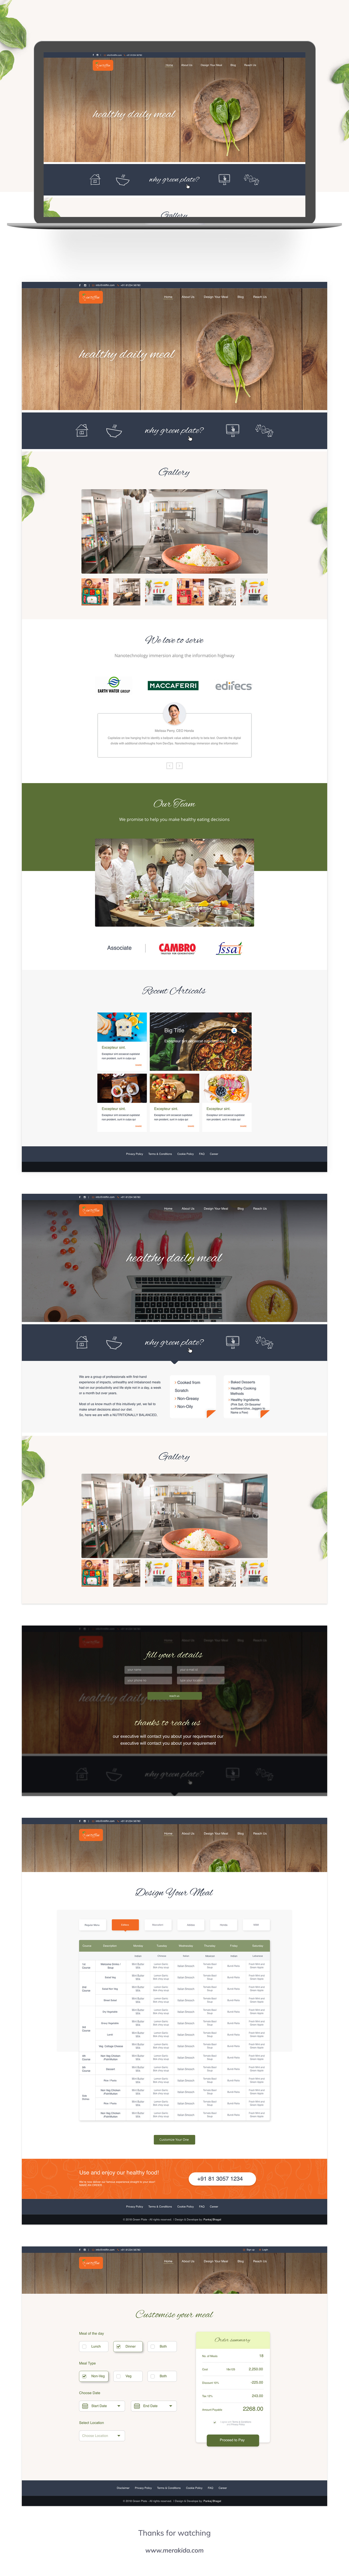 corporate Food  healthy homepage landingpage mockup design provider school UI/UX Design Website Design